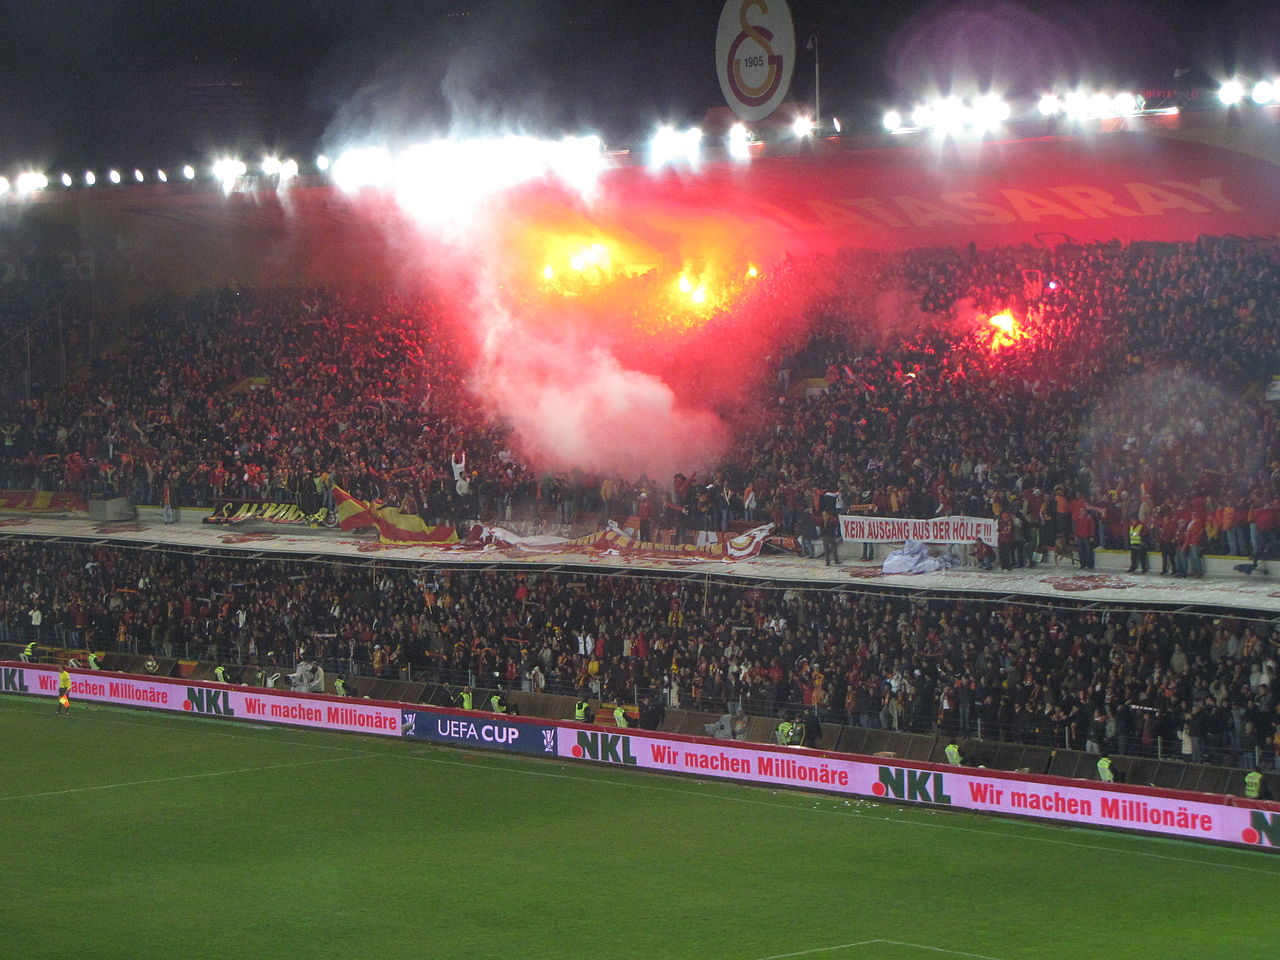 Flares at the Ali Sami Yen Stadium